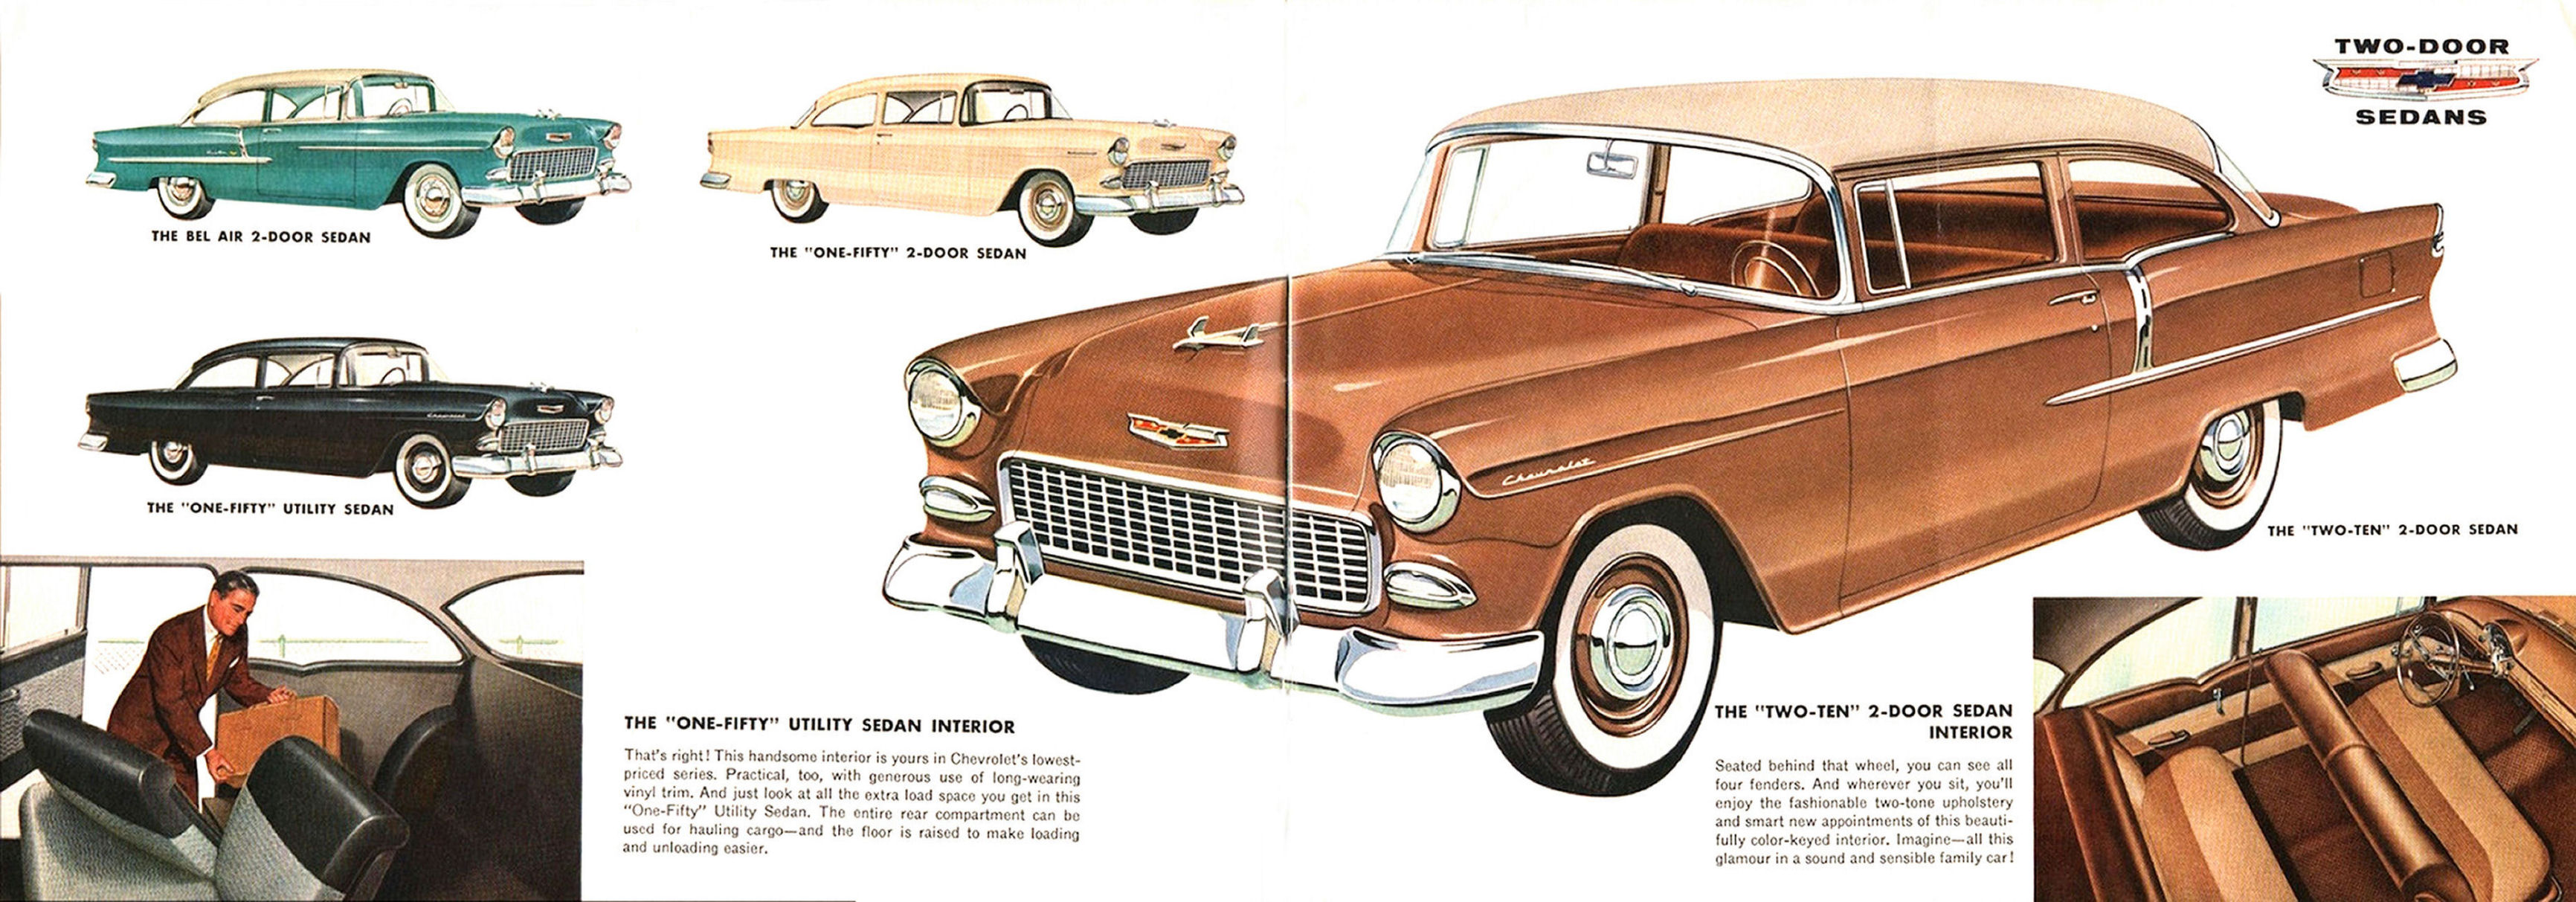 1955_Chevrolet_Full_Line_y-04-05